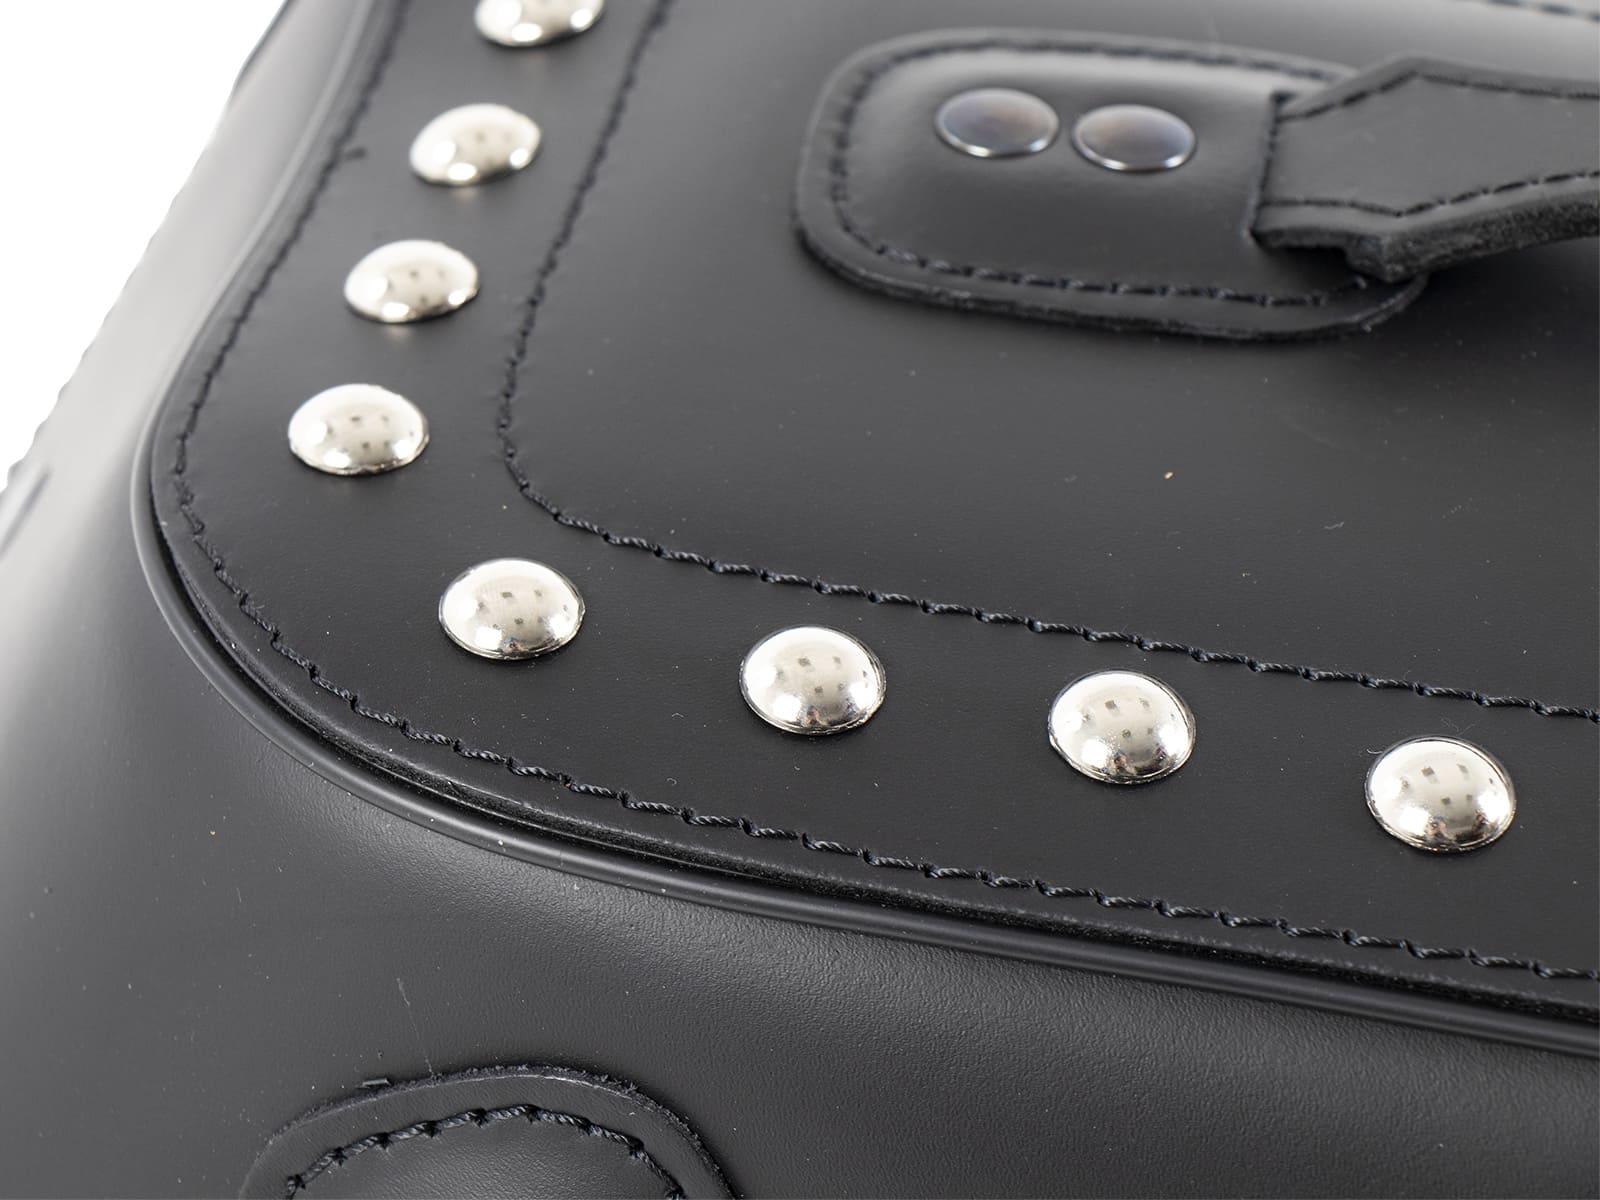 Leather single bag Buffalo Big Custom left for C-Bow holder | 620253 00 01